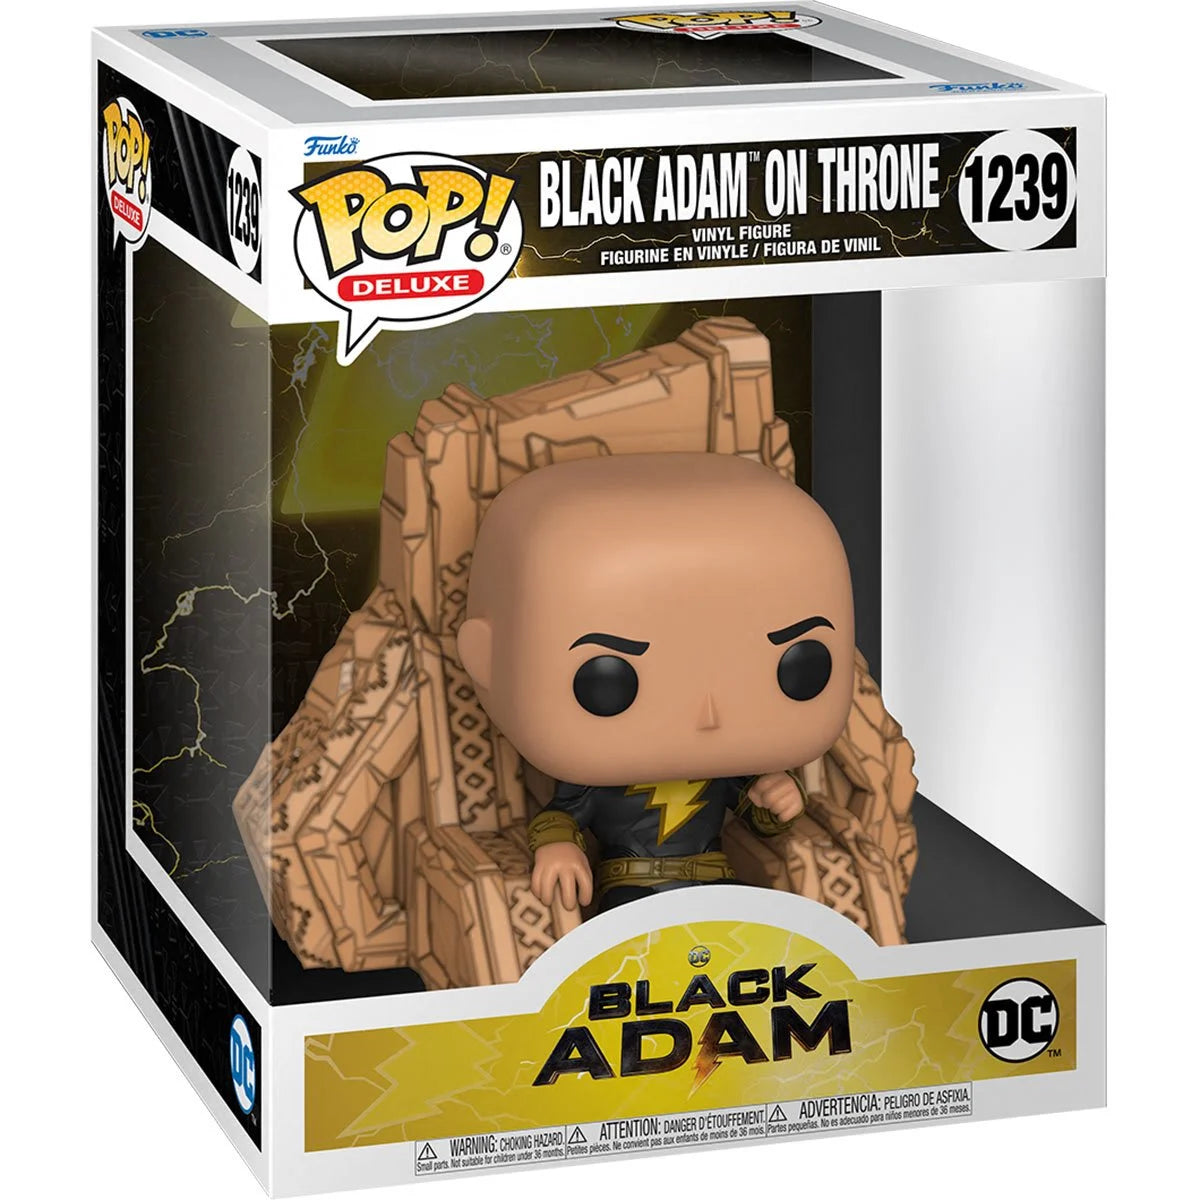 Black Adam on Throne Deluxe Pop! Hasbro